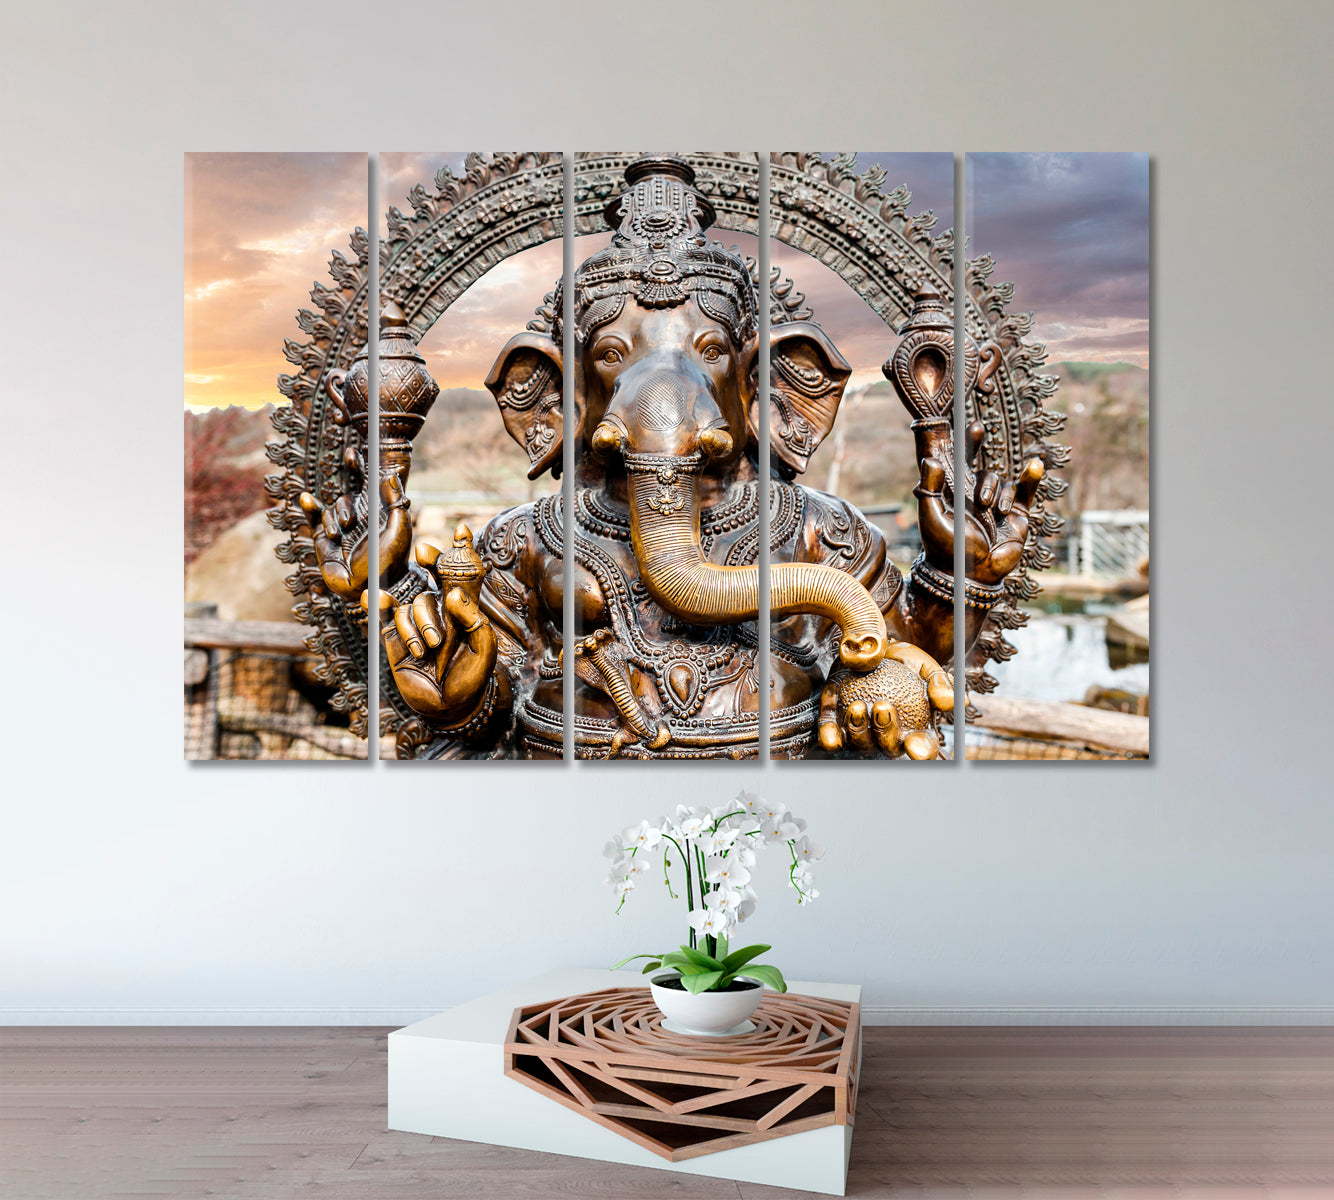 Statue of Hindu Elephant God Ganesha Dramatic Sky Religious Modern Art Artesty 5 panels 36" x 24" 